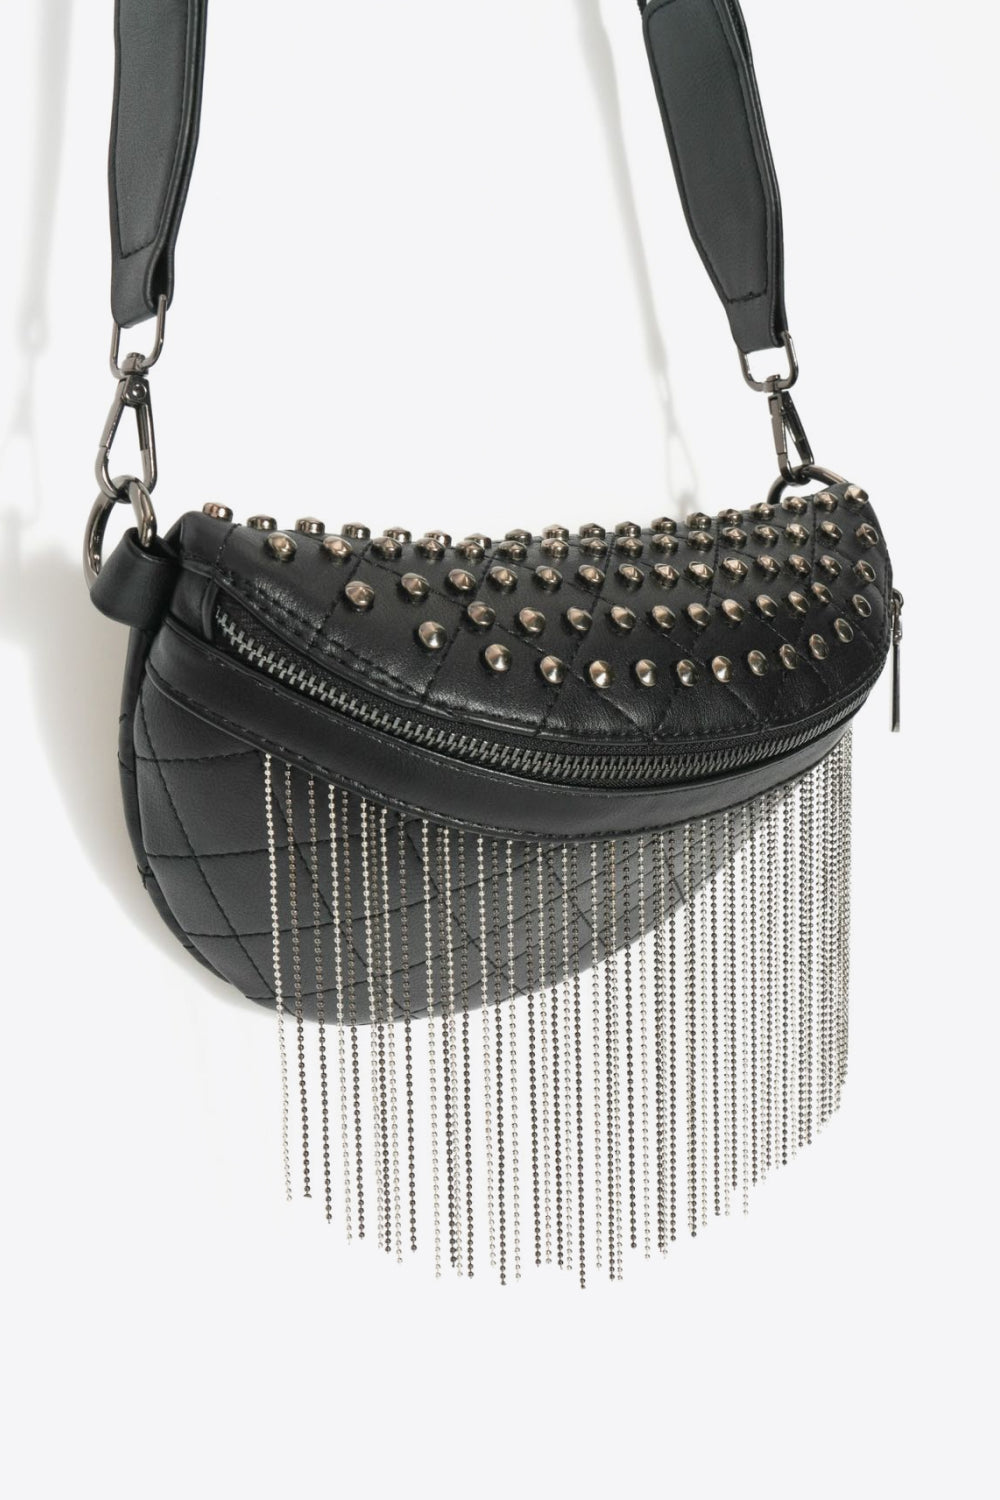 PU Leather Studded Sling Bag with Fringes - nailedmoms